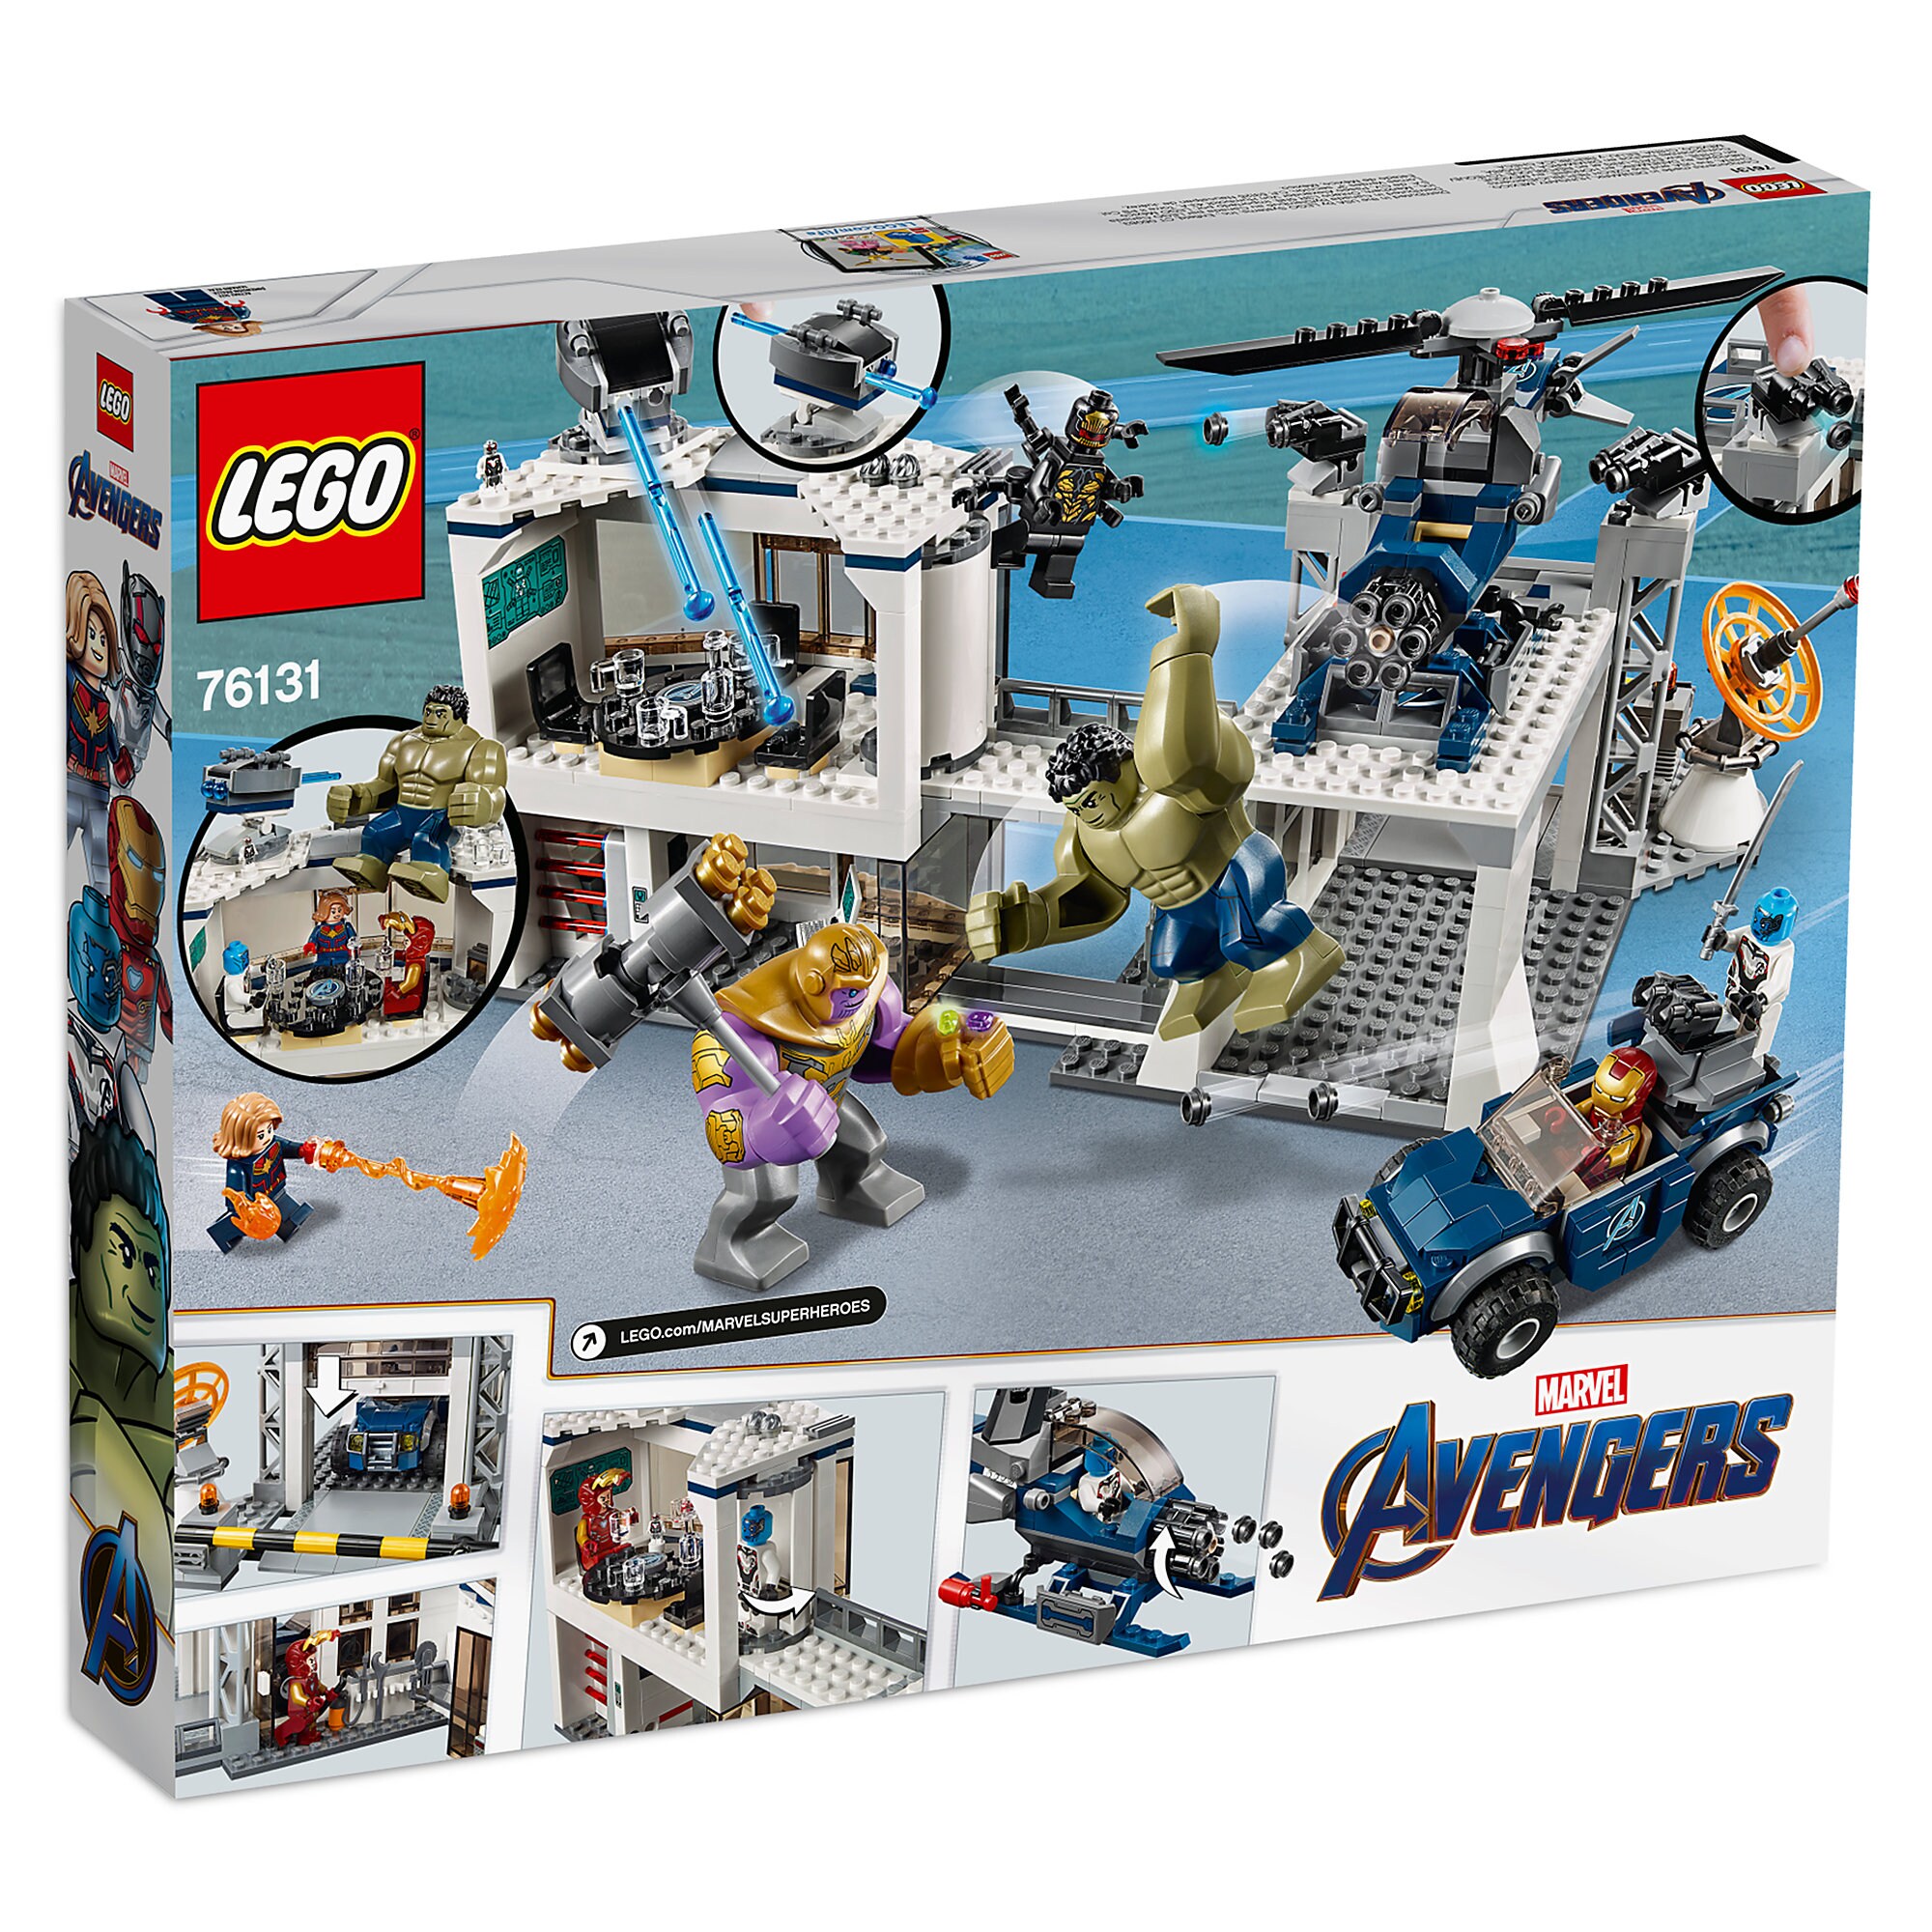 Marvel's Avengers: Endgame Compound Battle Play Set by LEGO